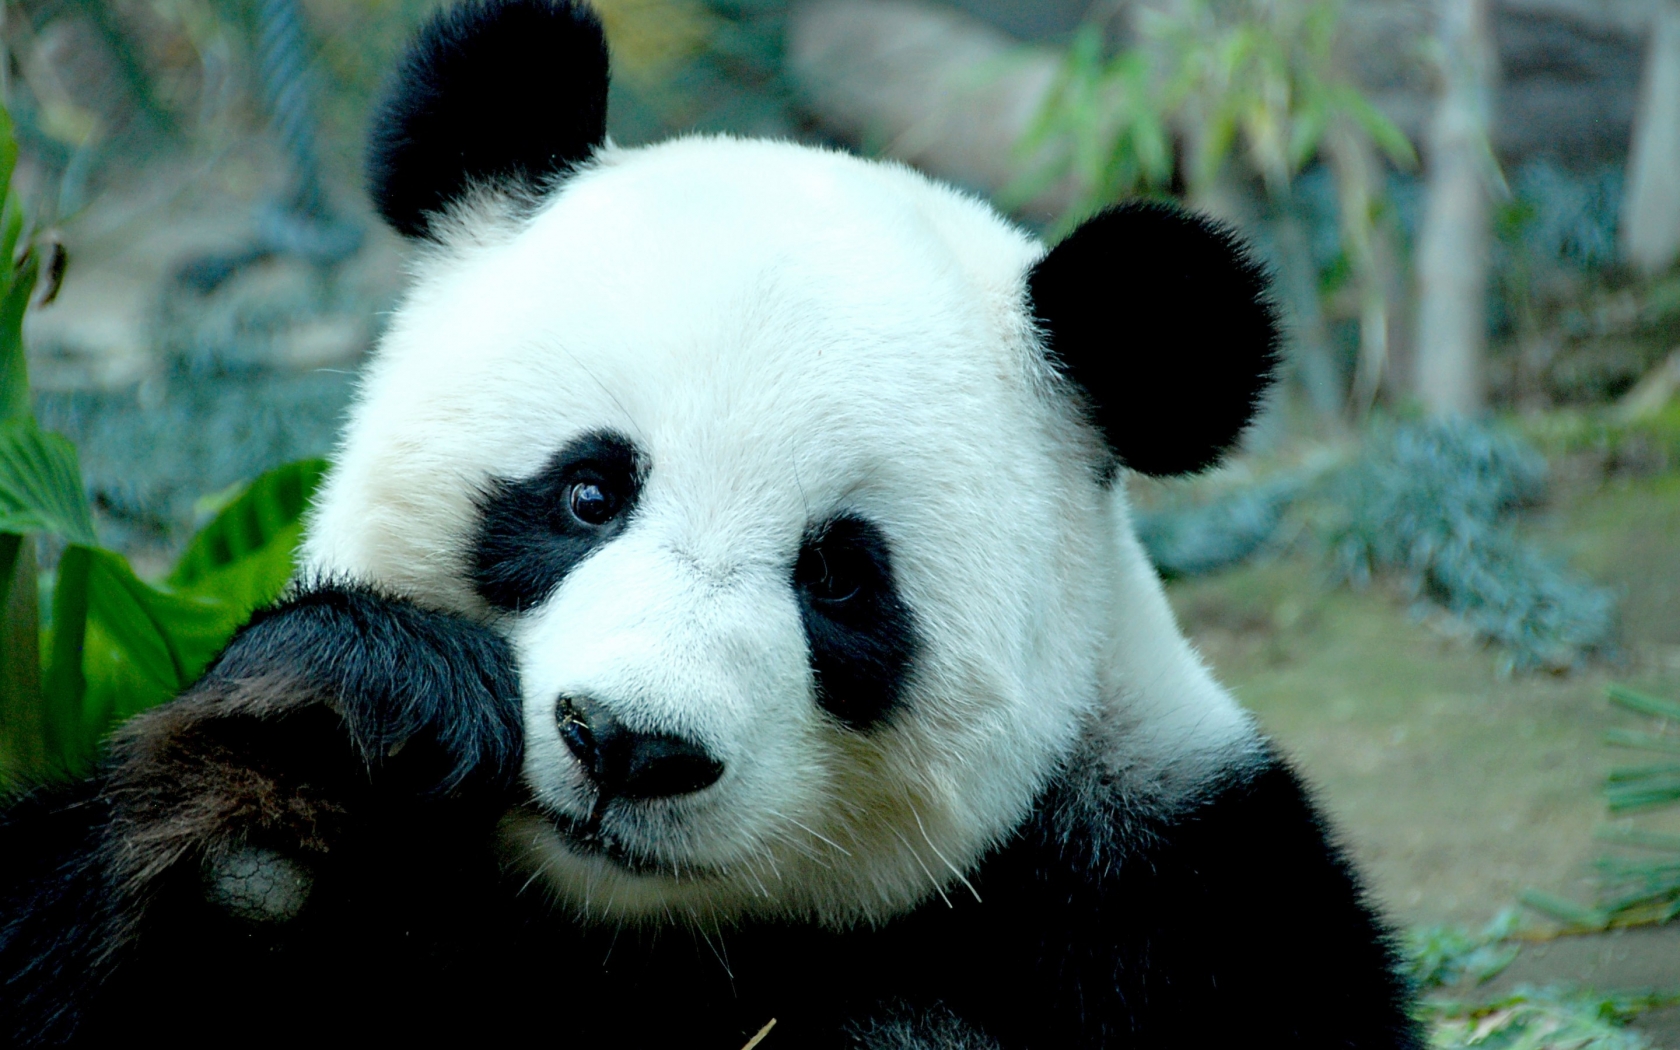 Sad Panda Bear for 1680 x 1050 widescreen resolution